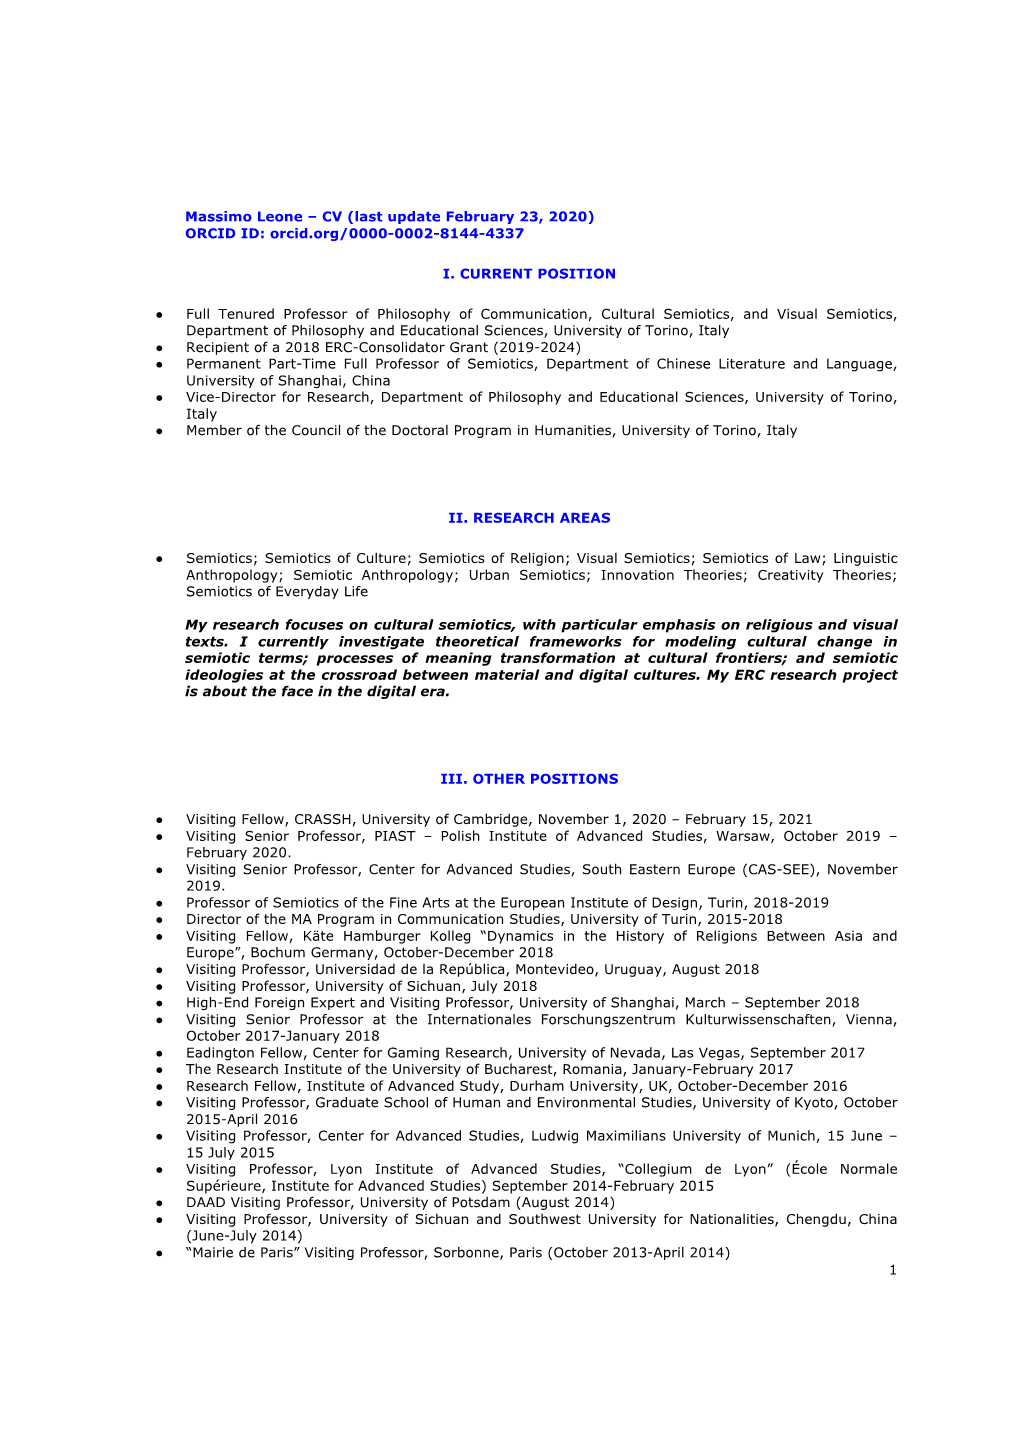 Massimo Leone – CV (Last Update February 23, 2020) ORCID ID: Orcid.Org/0000-0002-8144-4337